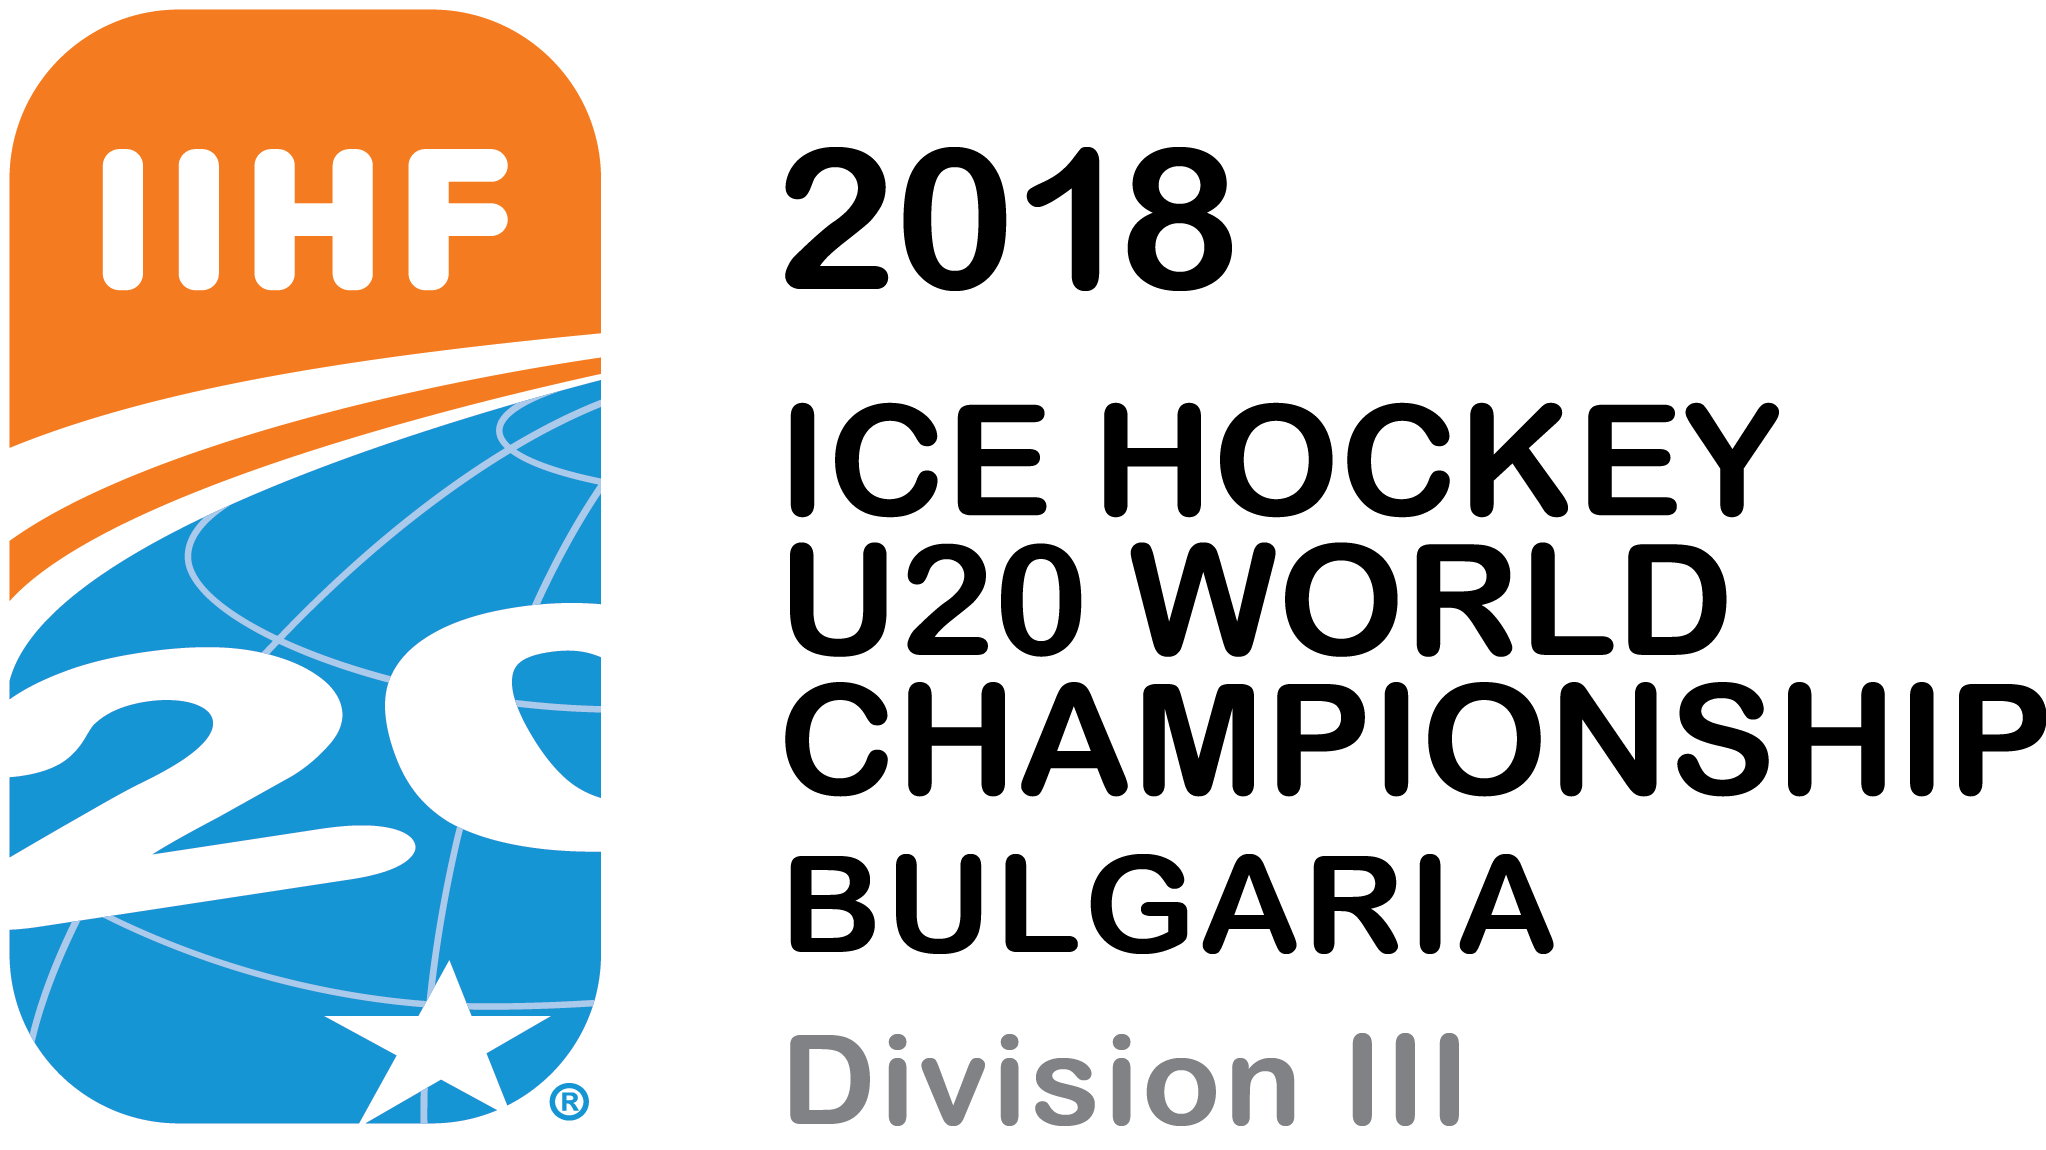 U20 World Championship Division III - Bulgaria